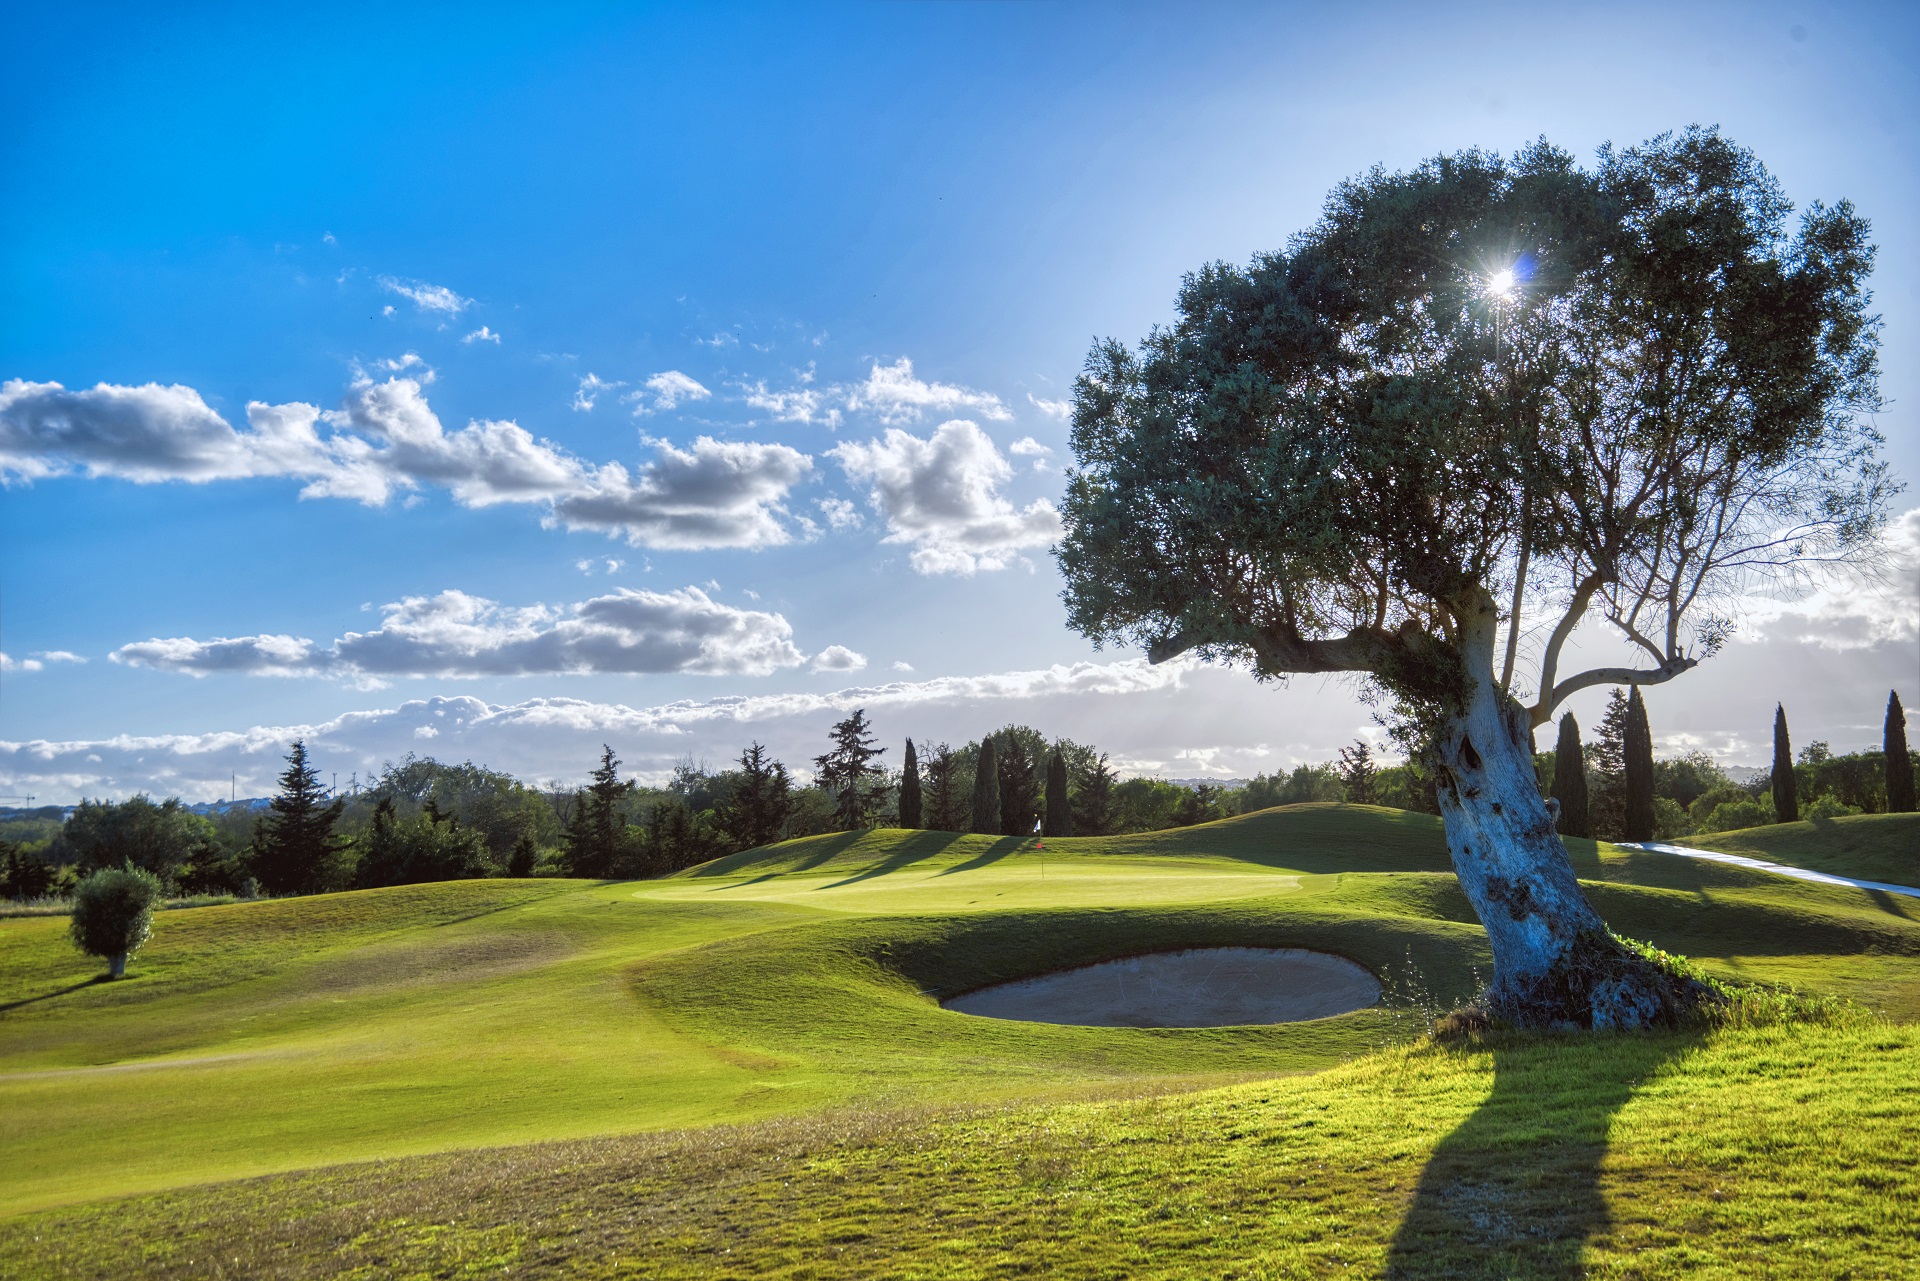 Dom Pedro Victoria Golf Course | Golf i Vilamoura, Algarve